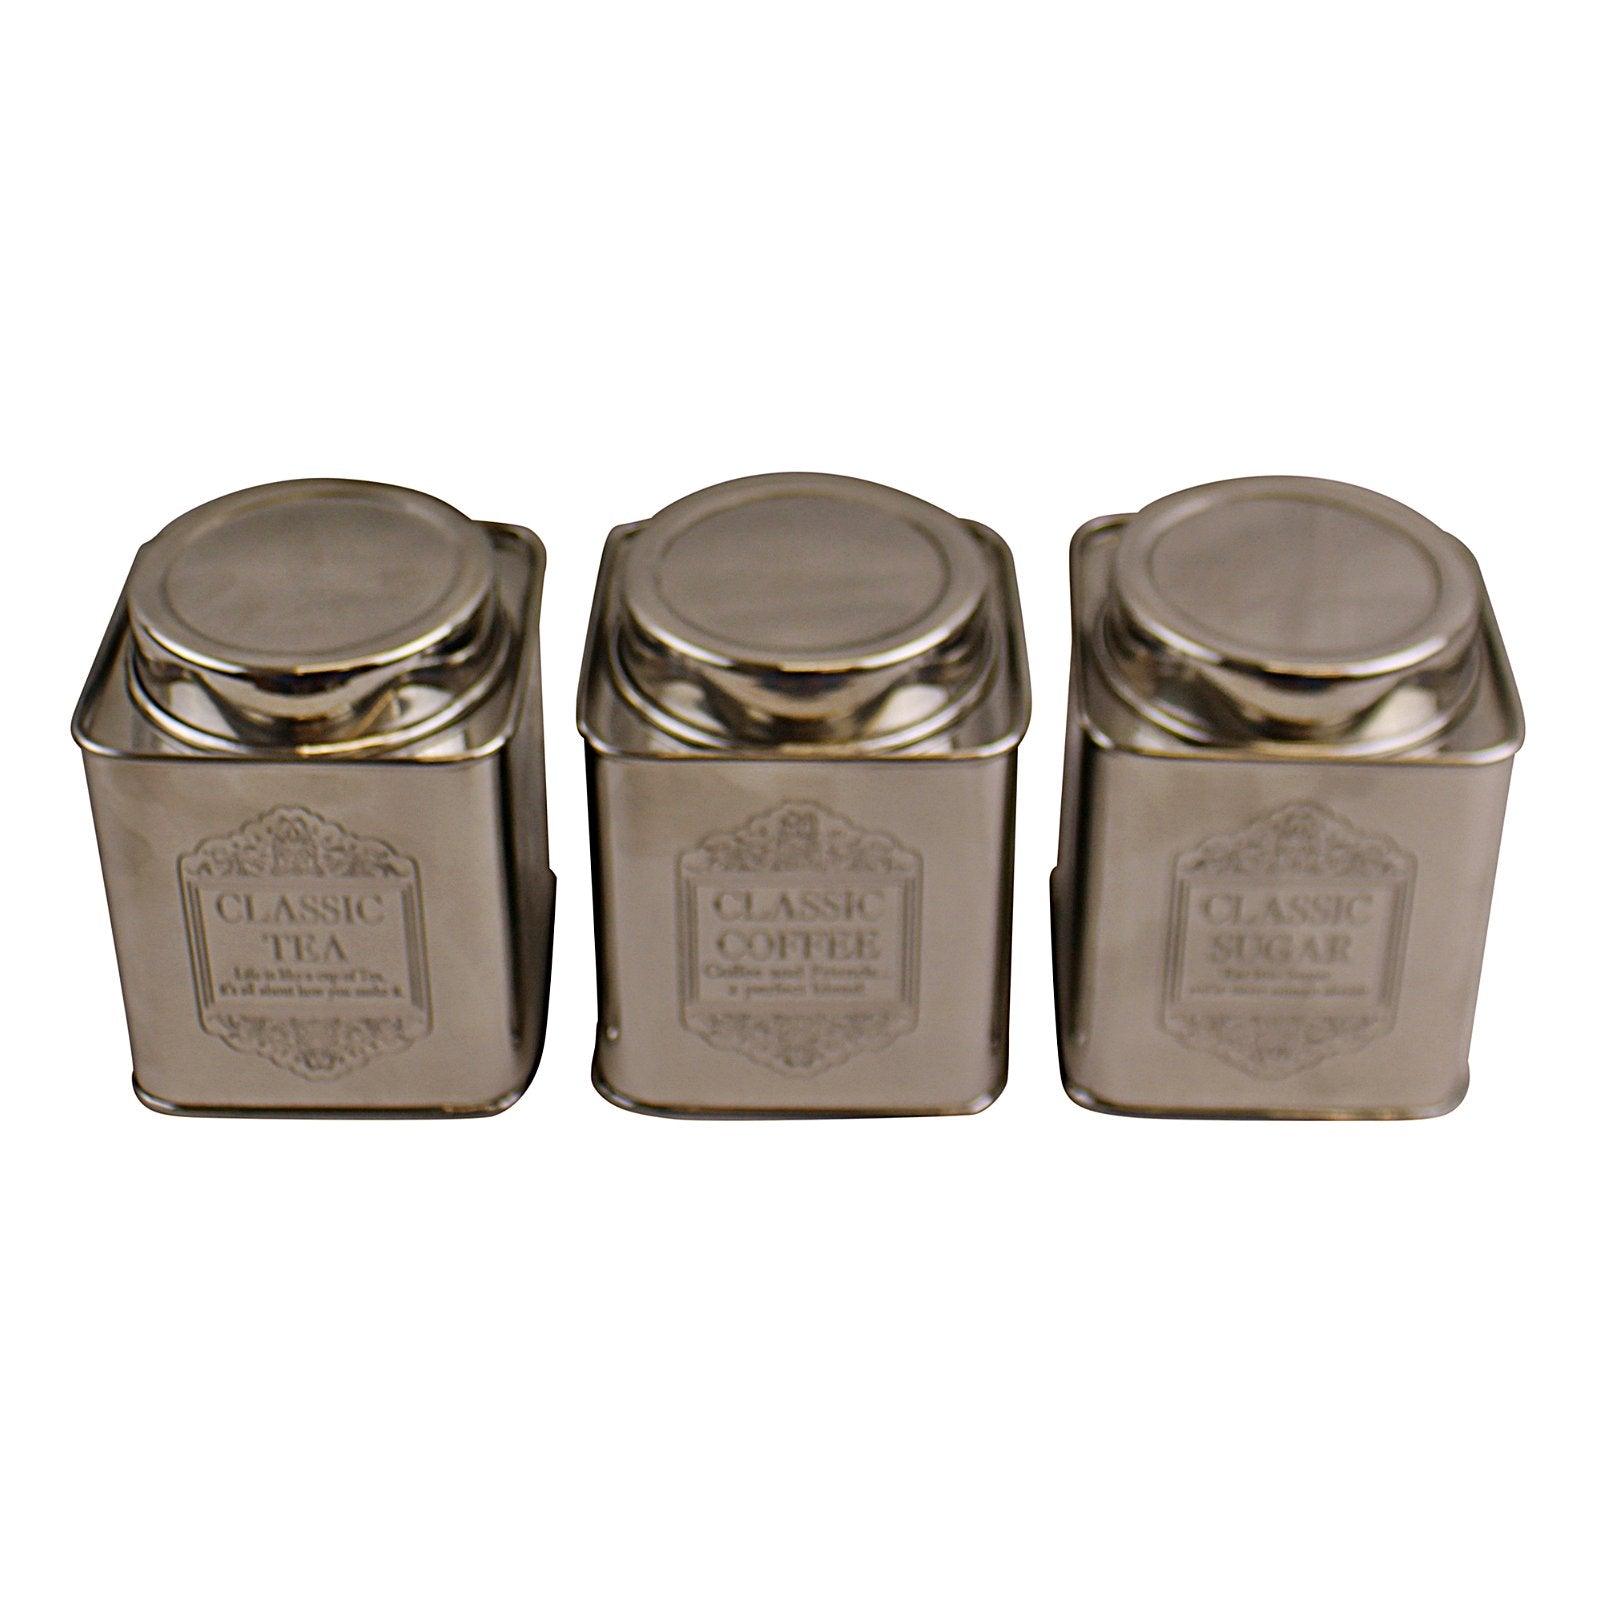 View Silver Metal Tea Coffee Sugar Storage Tins information